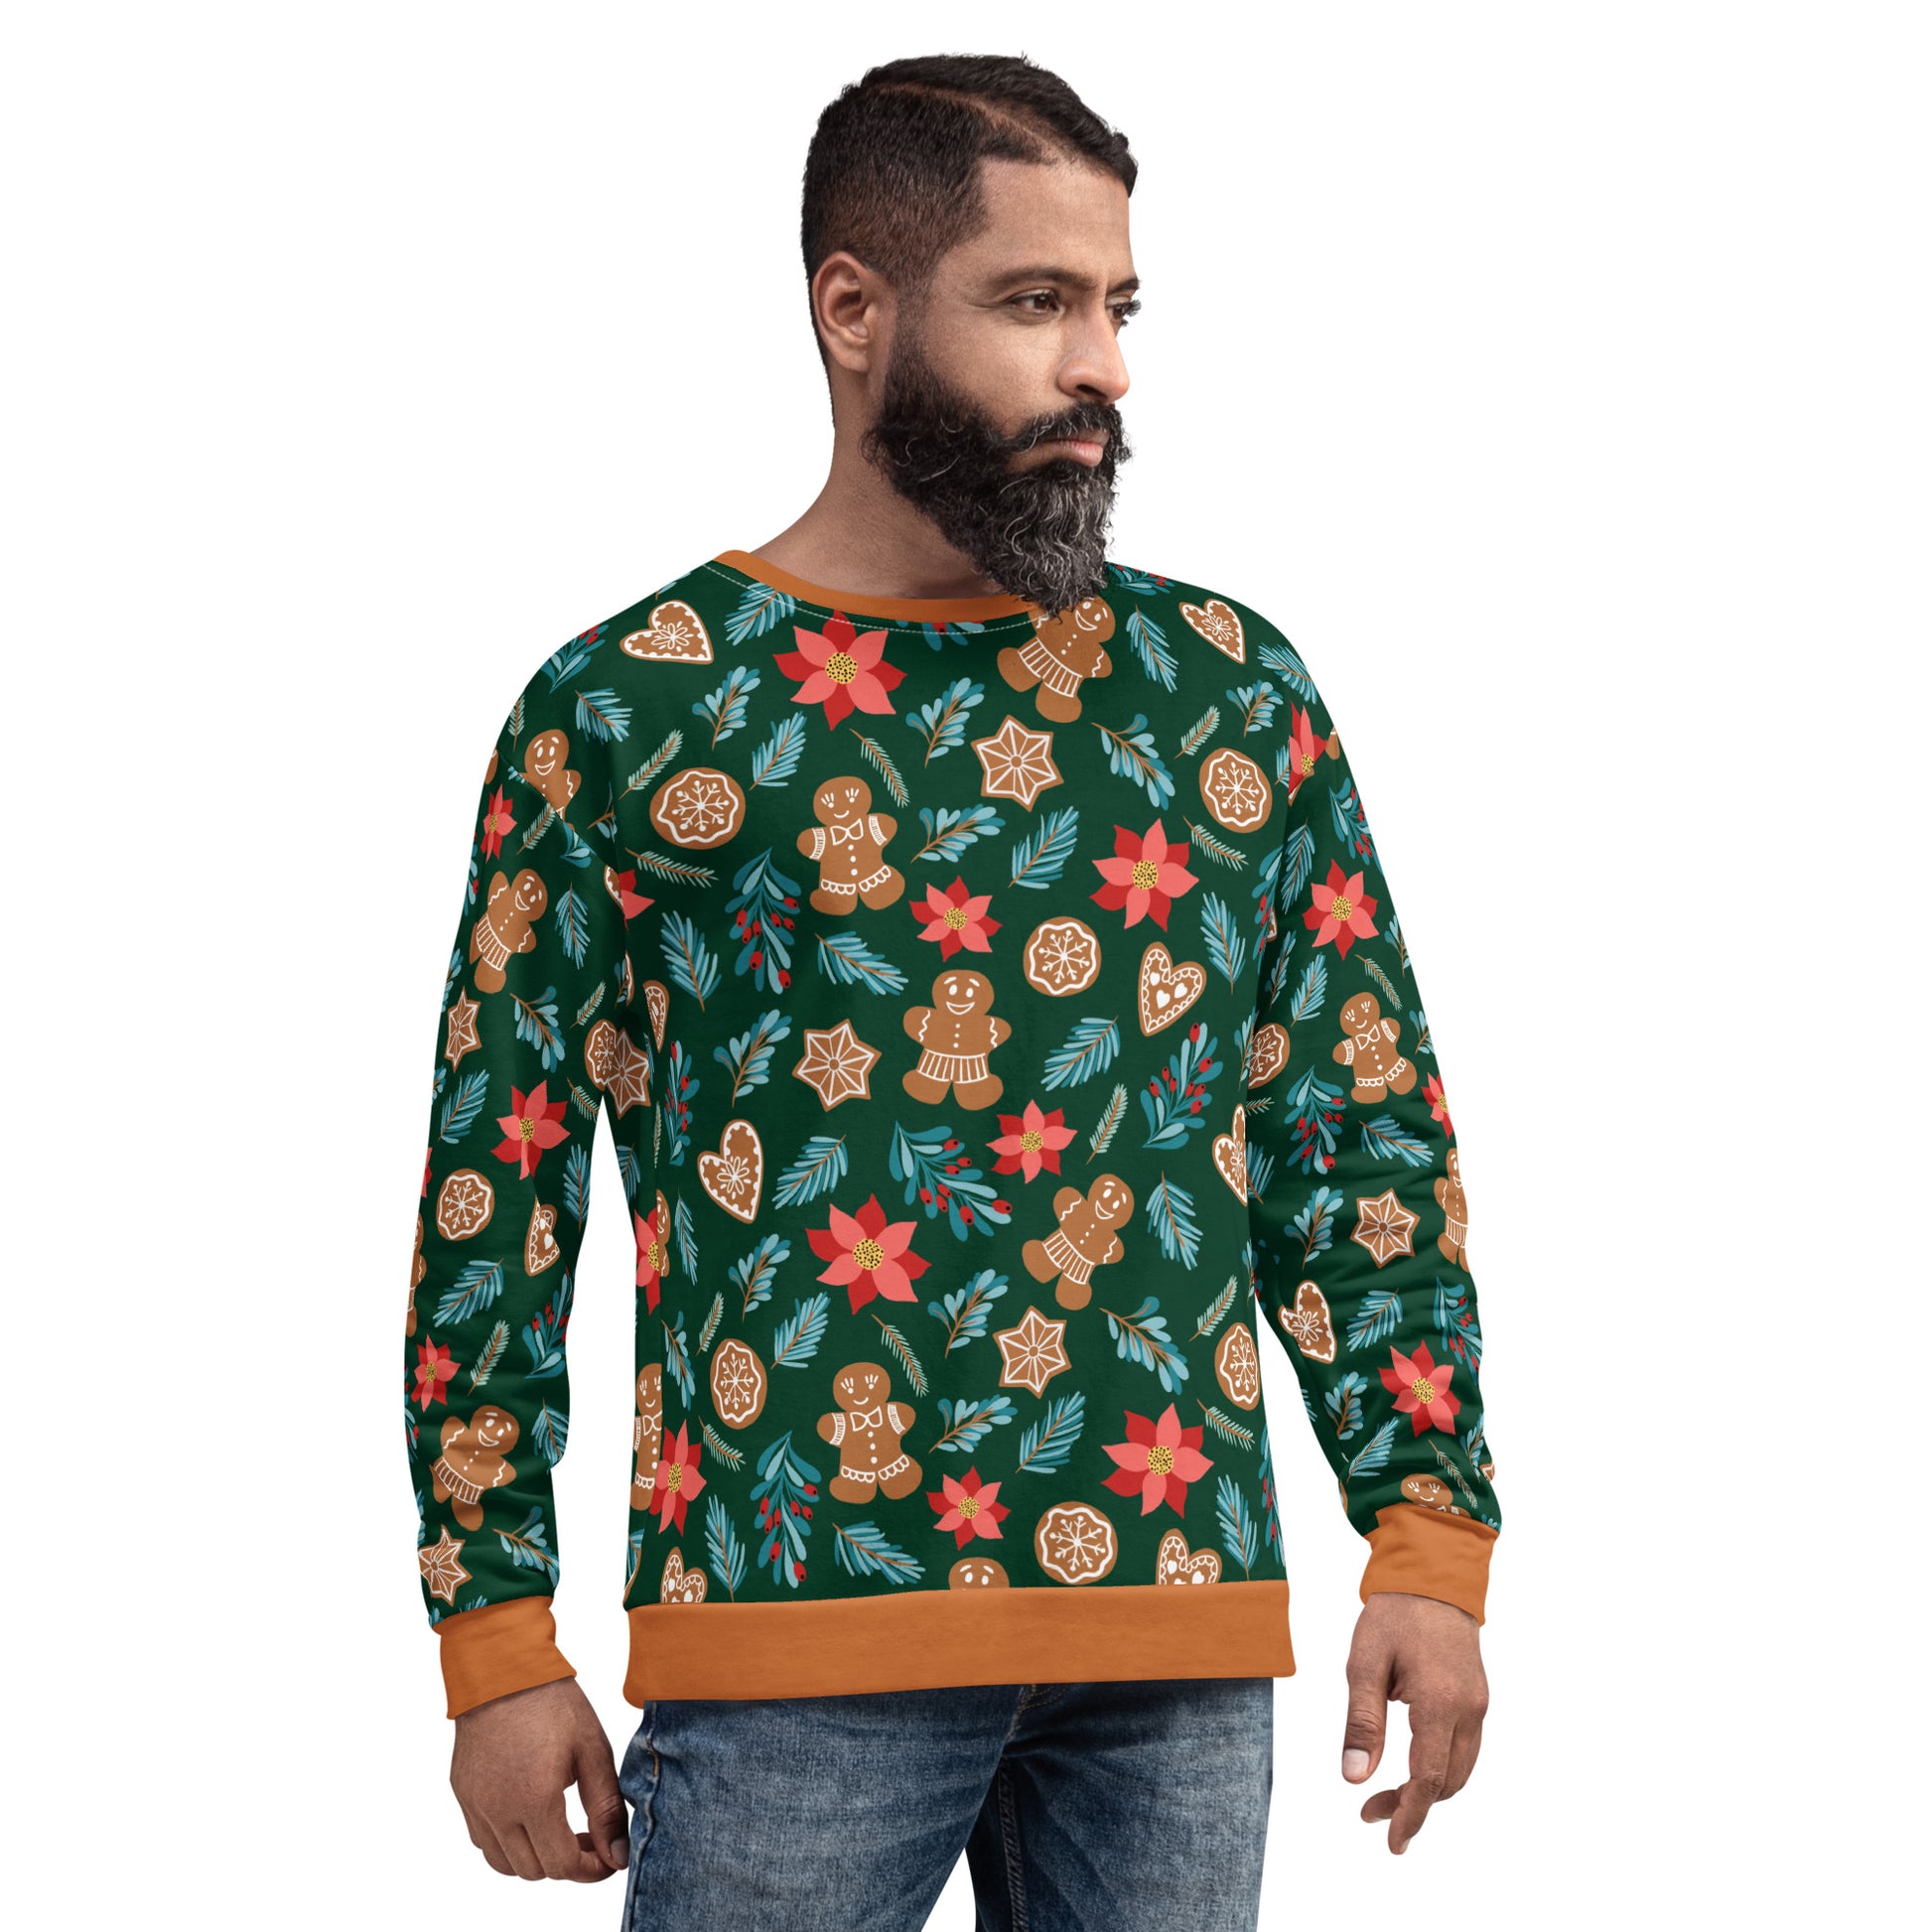 Sweatshirt - Fantasiapiparit / Gingerbread Fantasy - Long Sleeve- Print N Stuff - [designed in Turku Finland]